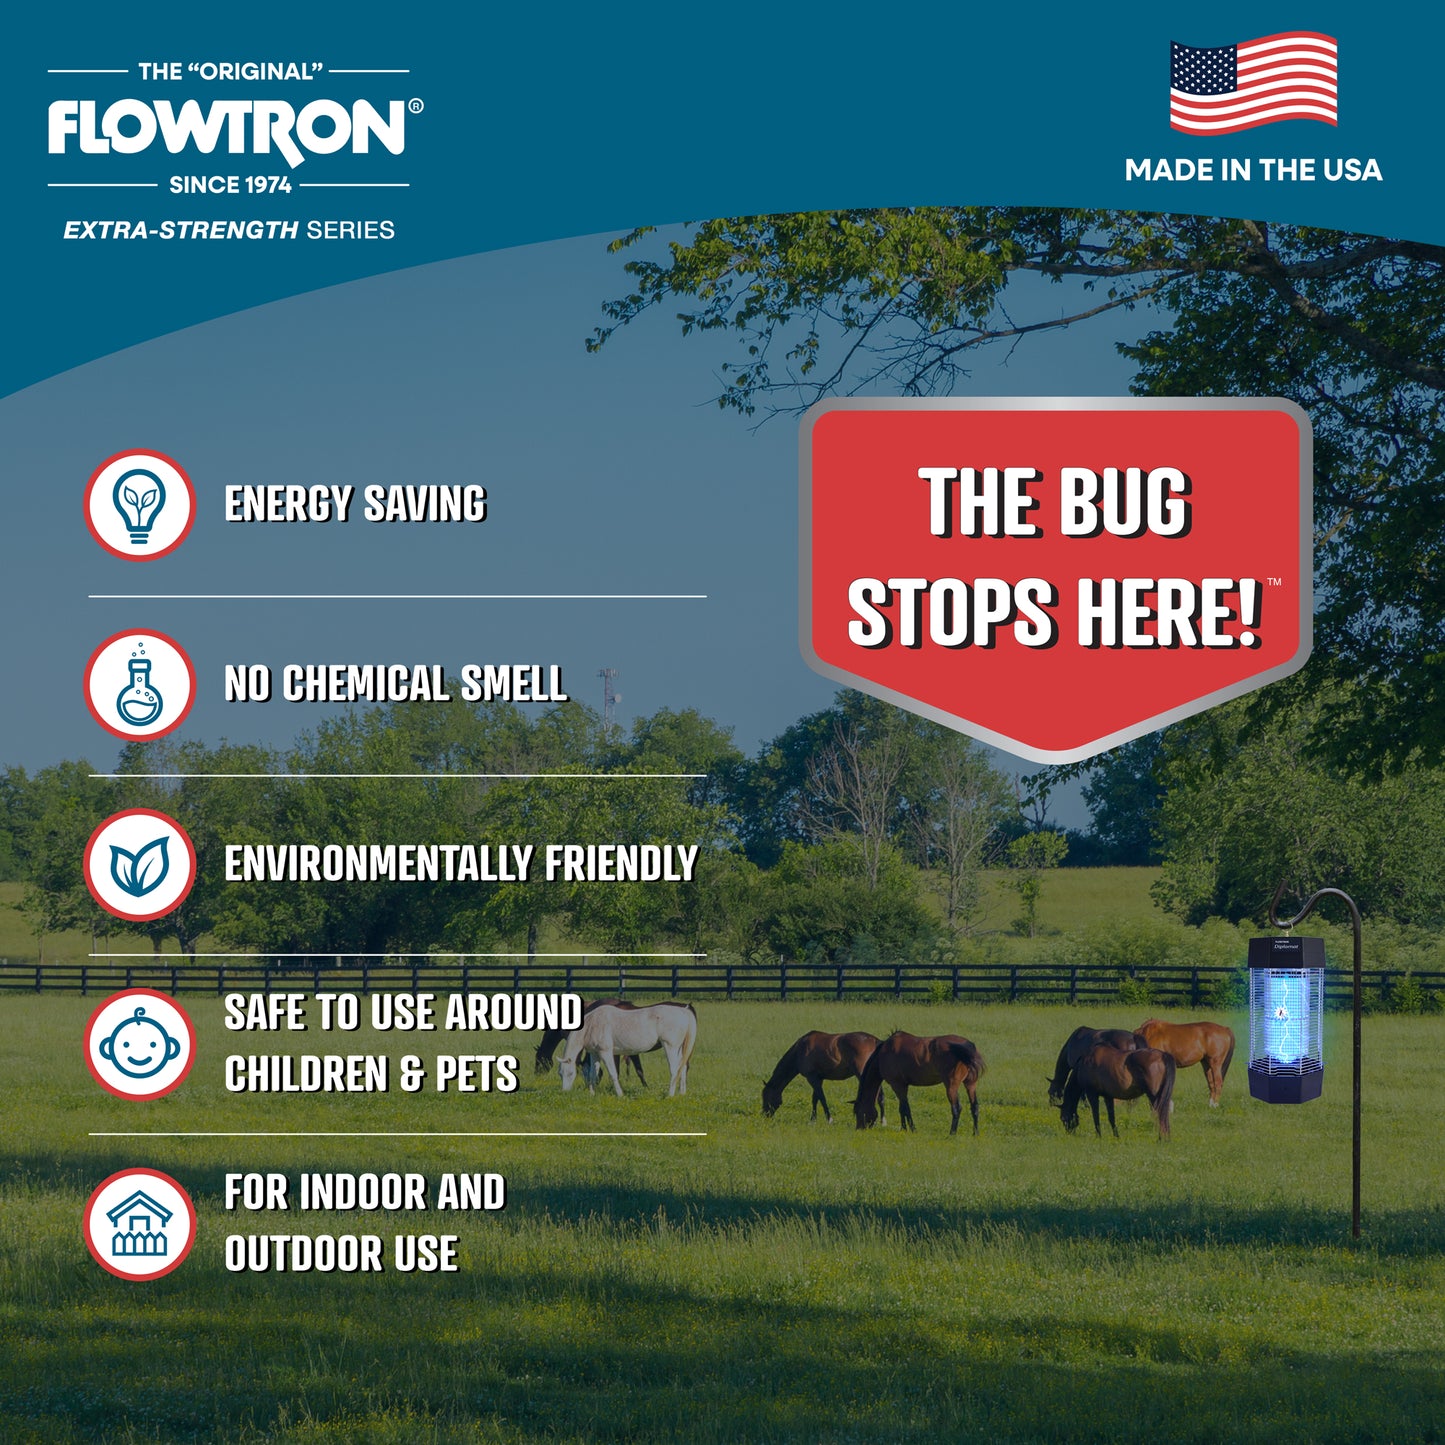 Flowtron 120W Indoor/Outdoor Bug Zapper, 2000 sq.ft / 2 Acre coverage